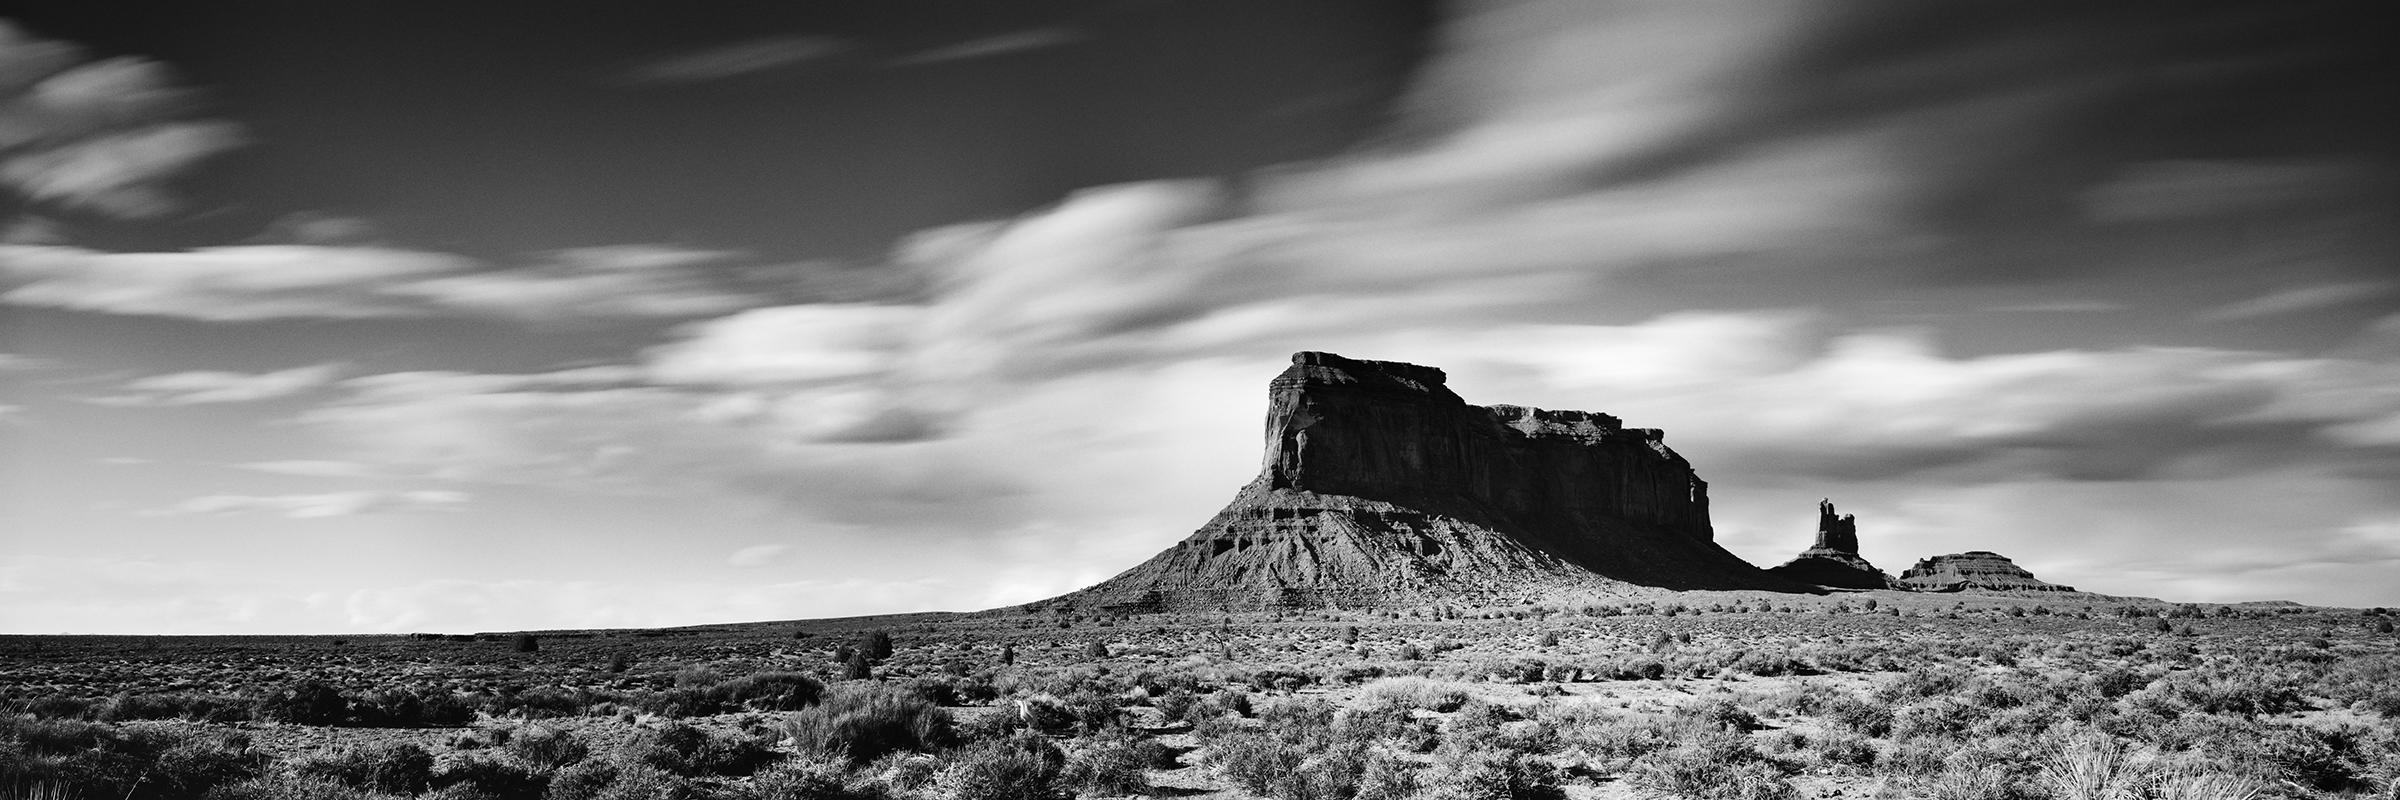 Gerald Berghammer Landscape Photograph - Wild West Panorama, Utah, Monument Valley, minimalist black and white landscape	